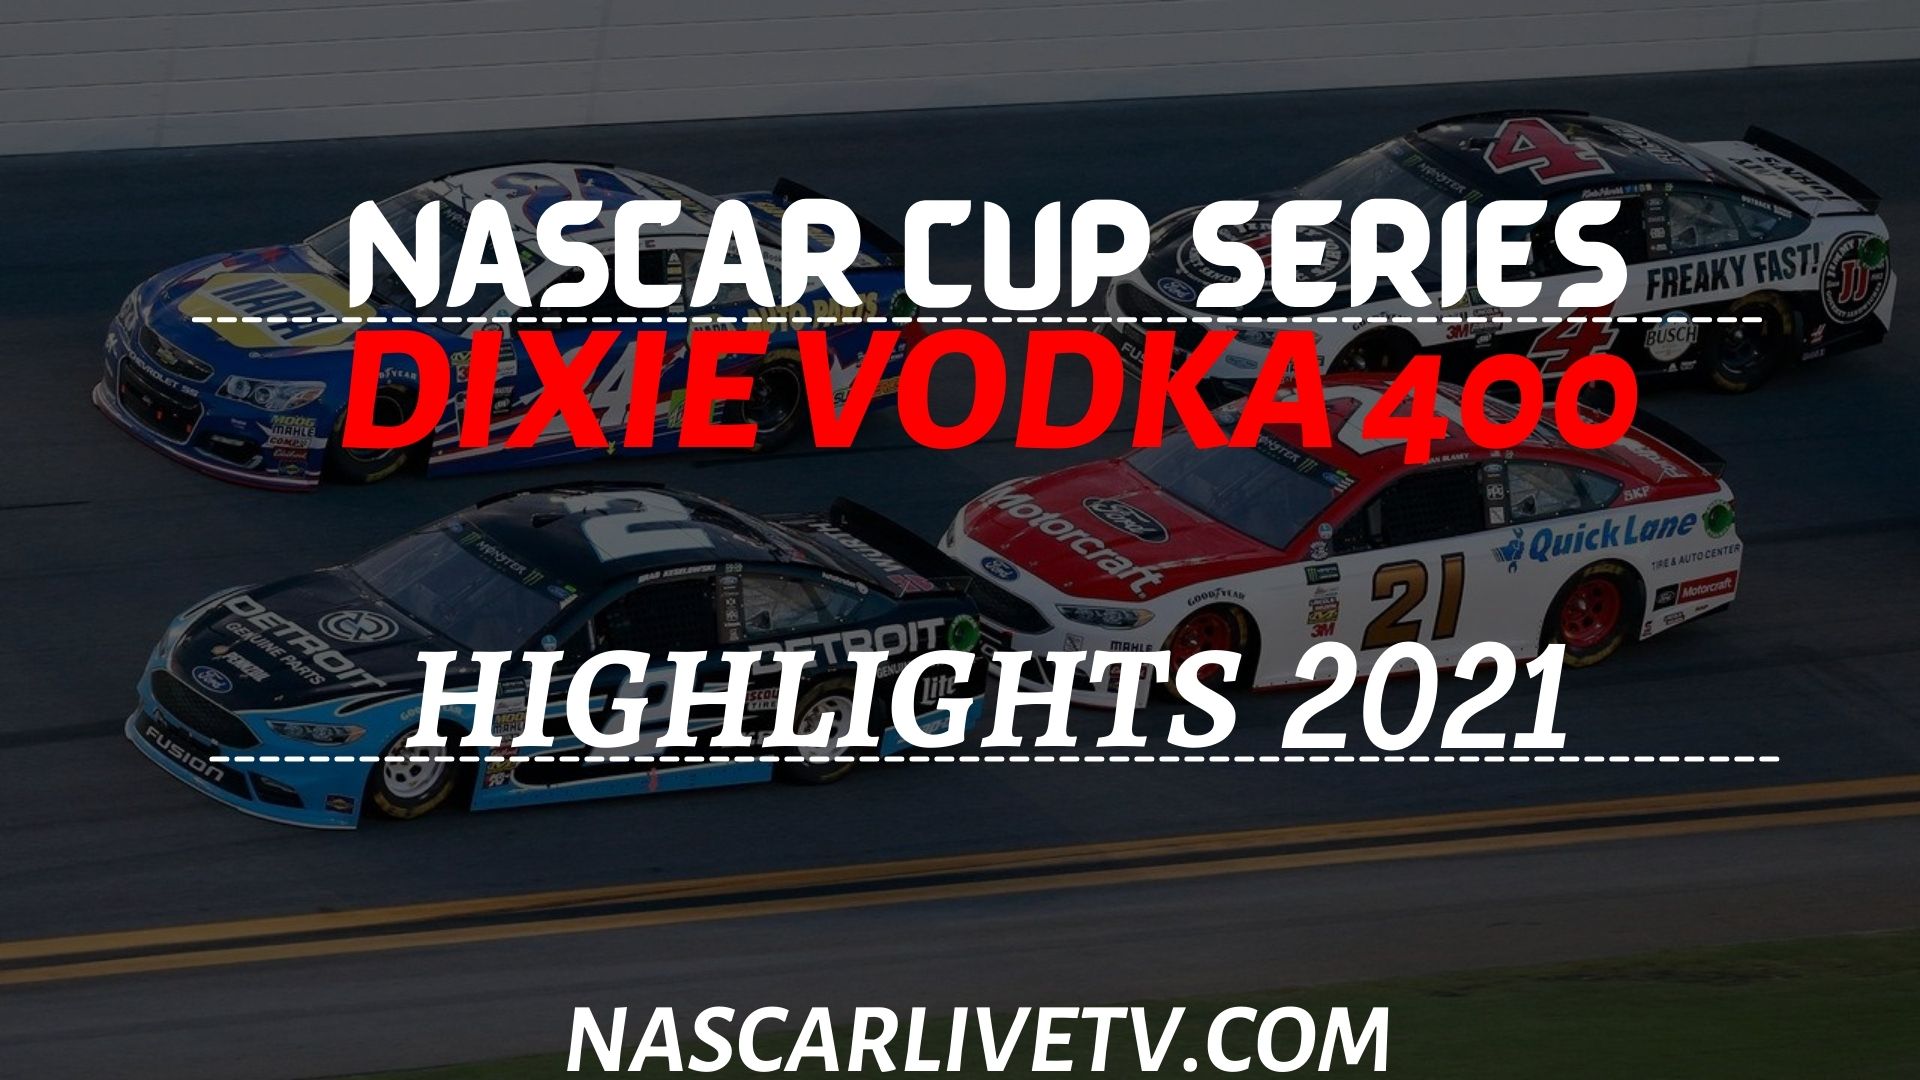 Dixie Vodka 400 Highlights NASCAR Cup Series 2021